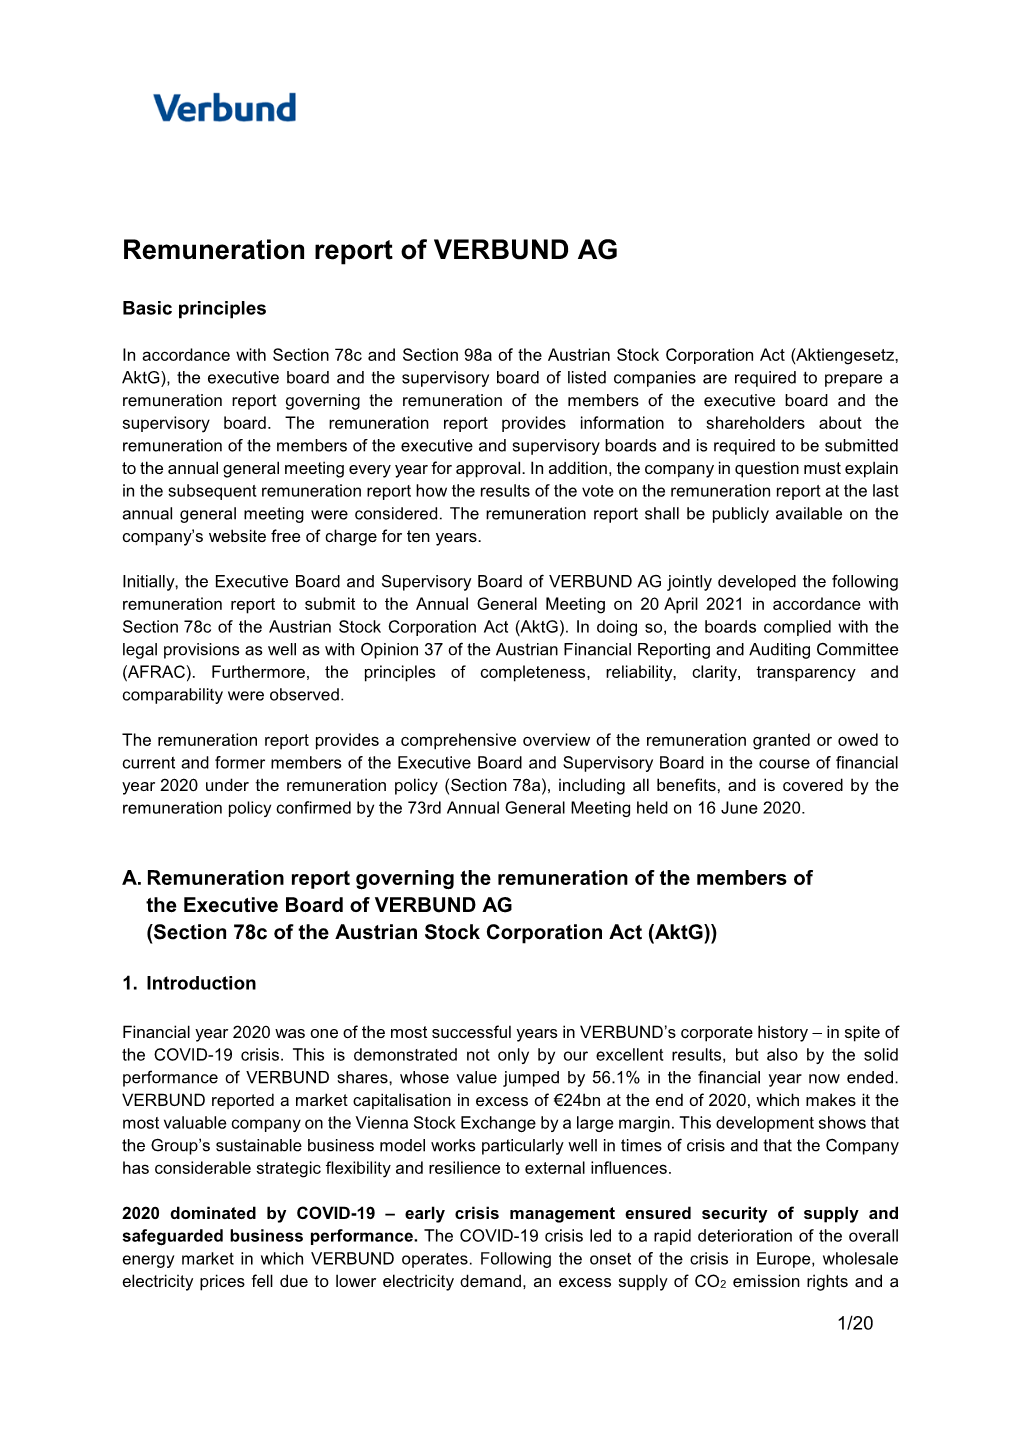 Remuneration Report of VERBUND AG